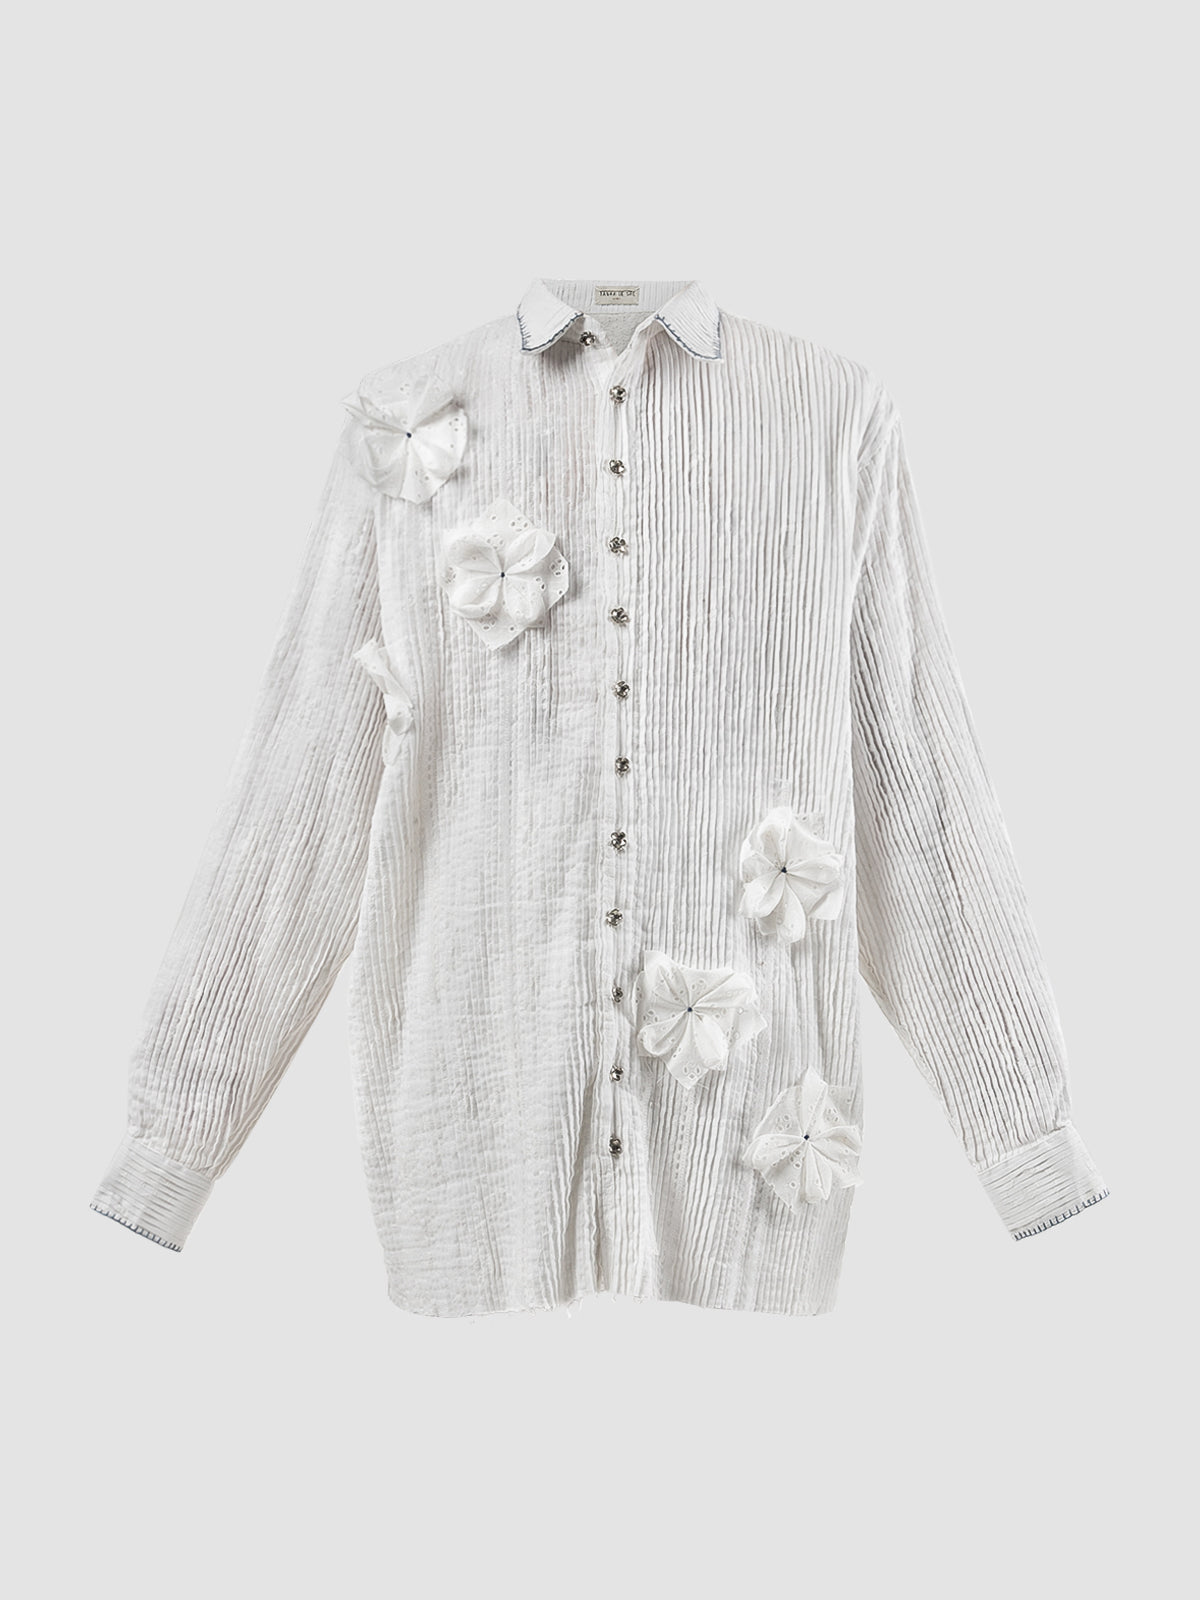 Flowery white long-sleeved pleated shirt